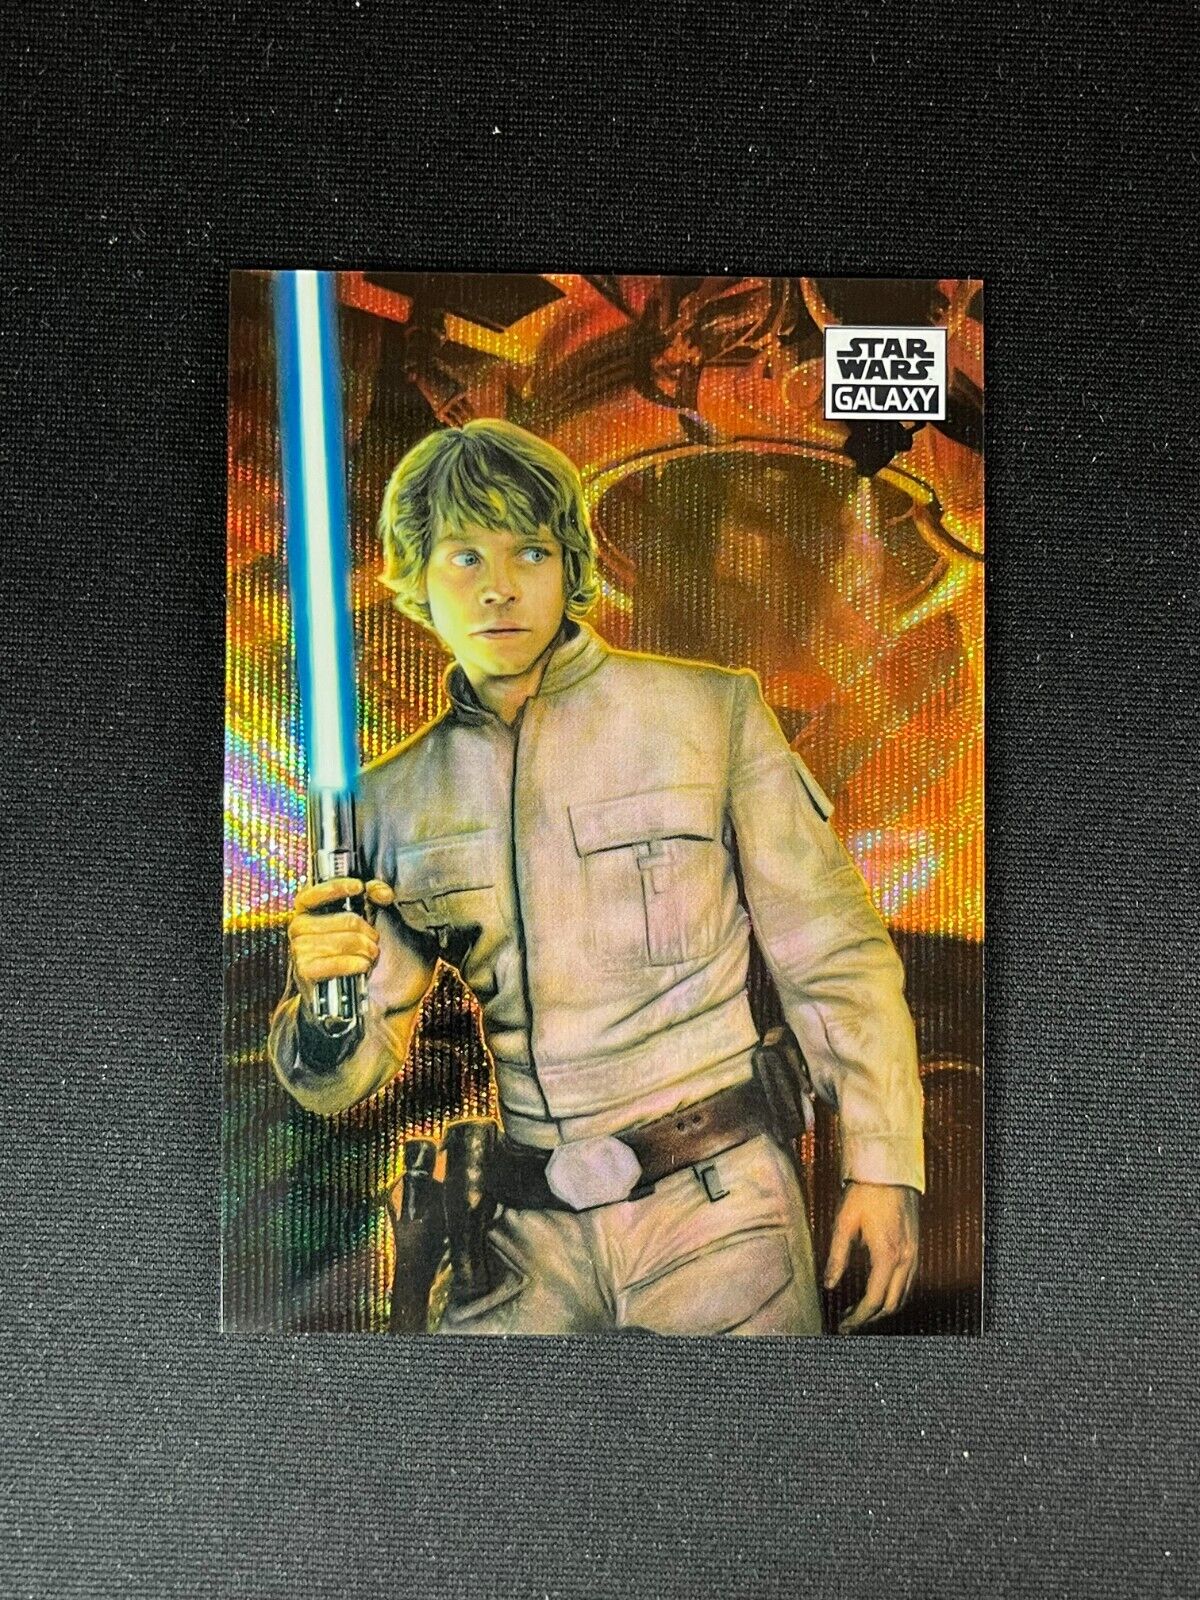 Luke Skywalker 2021 Topps Chrome Star Wars Galaxy Wave Refractor Card #34 (25/99